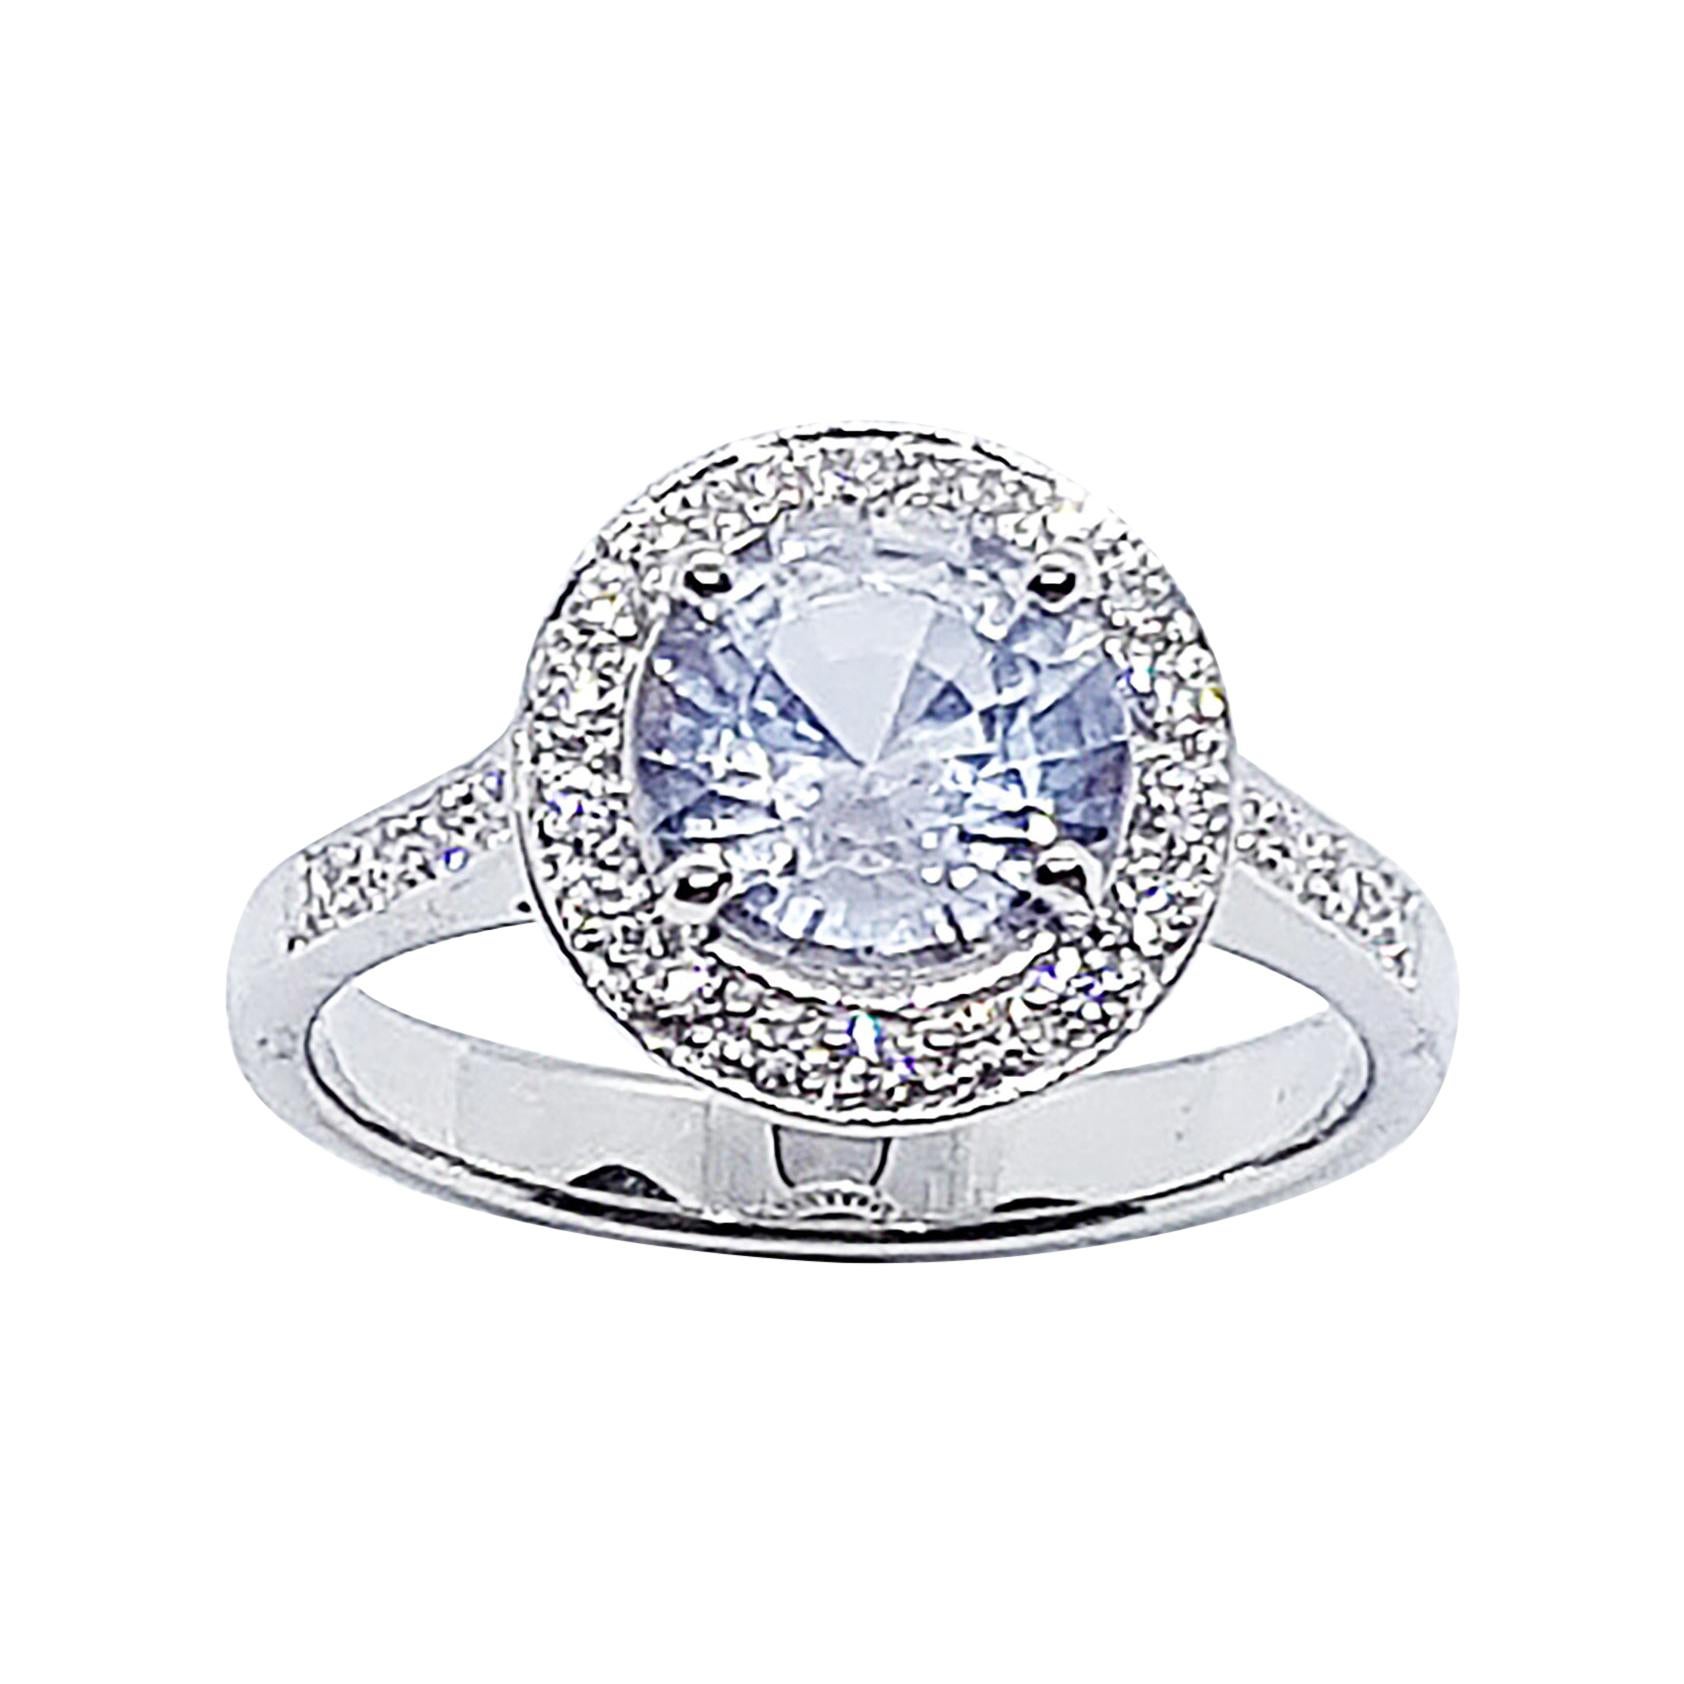 White Sapphire with Diamond Ring Set in 18 Karat White Gold Settings